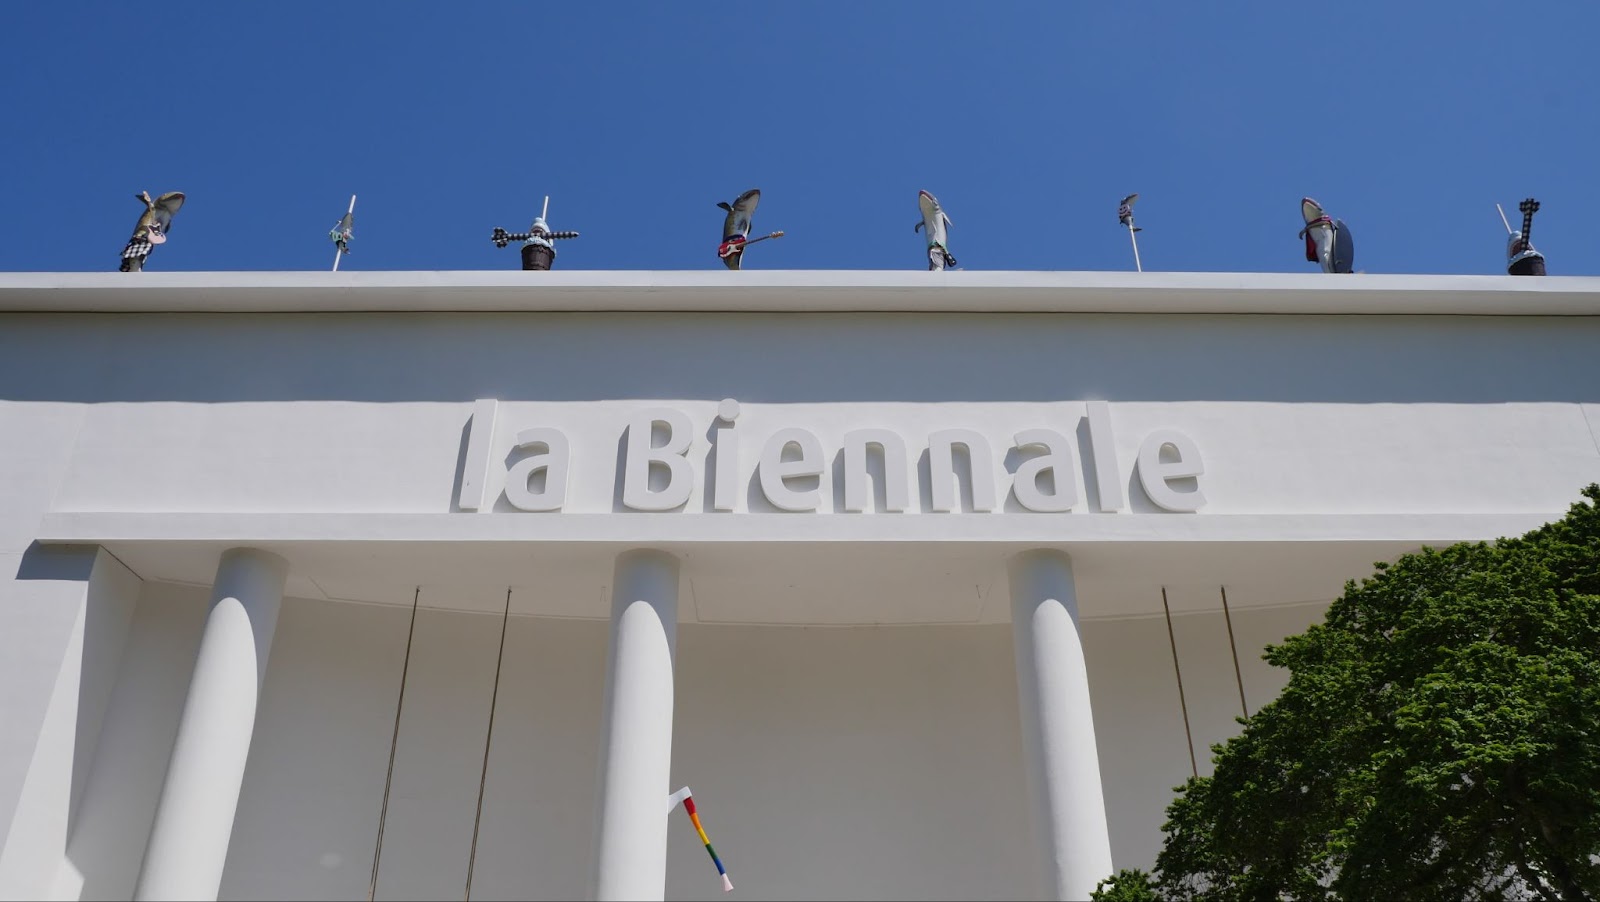 the venice biennale